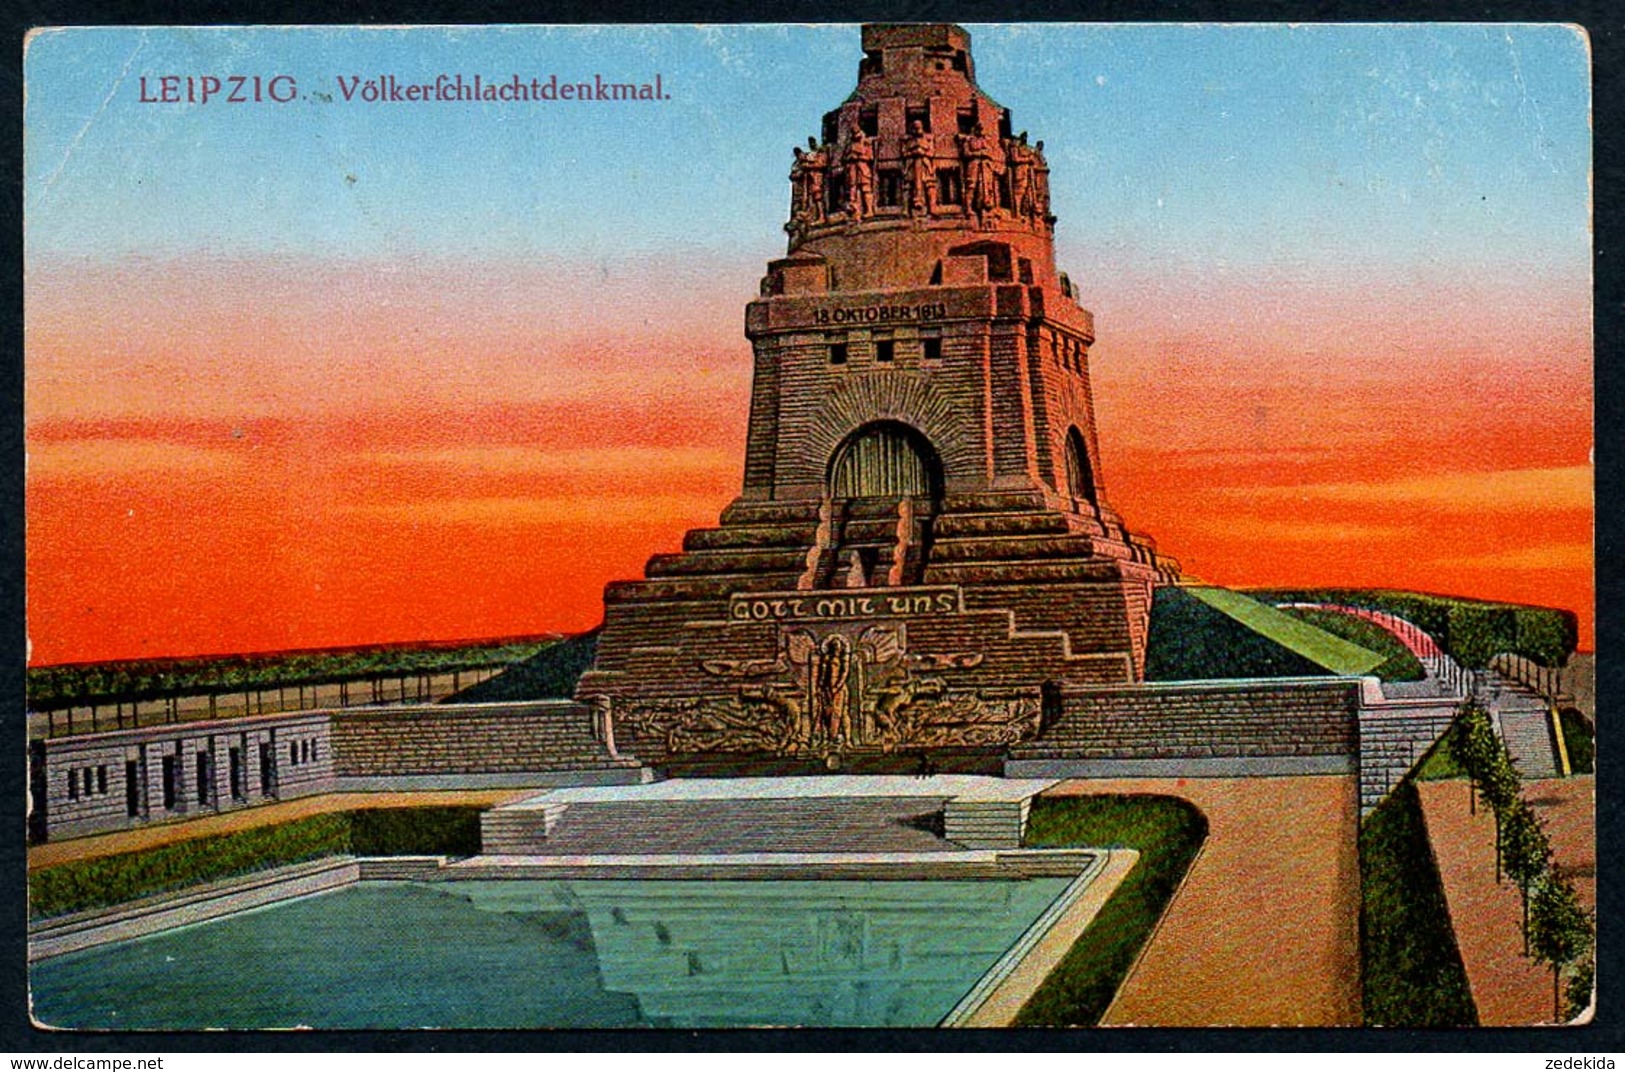 B4774 - Völkerschlachtdenkmal Denkmal - Leipzig - Louis Glaser - Offizielle Denkmal Karte - Monuments